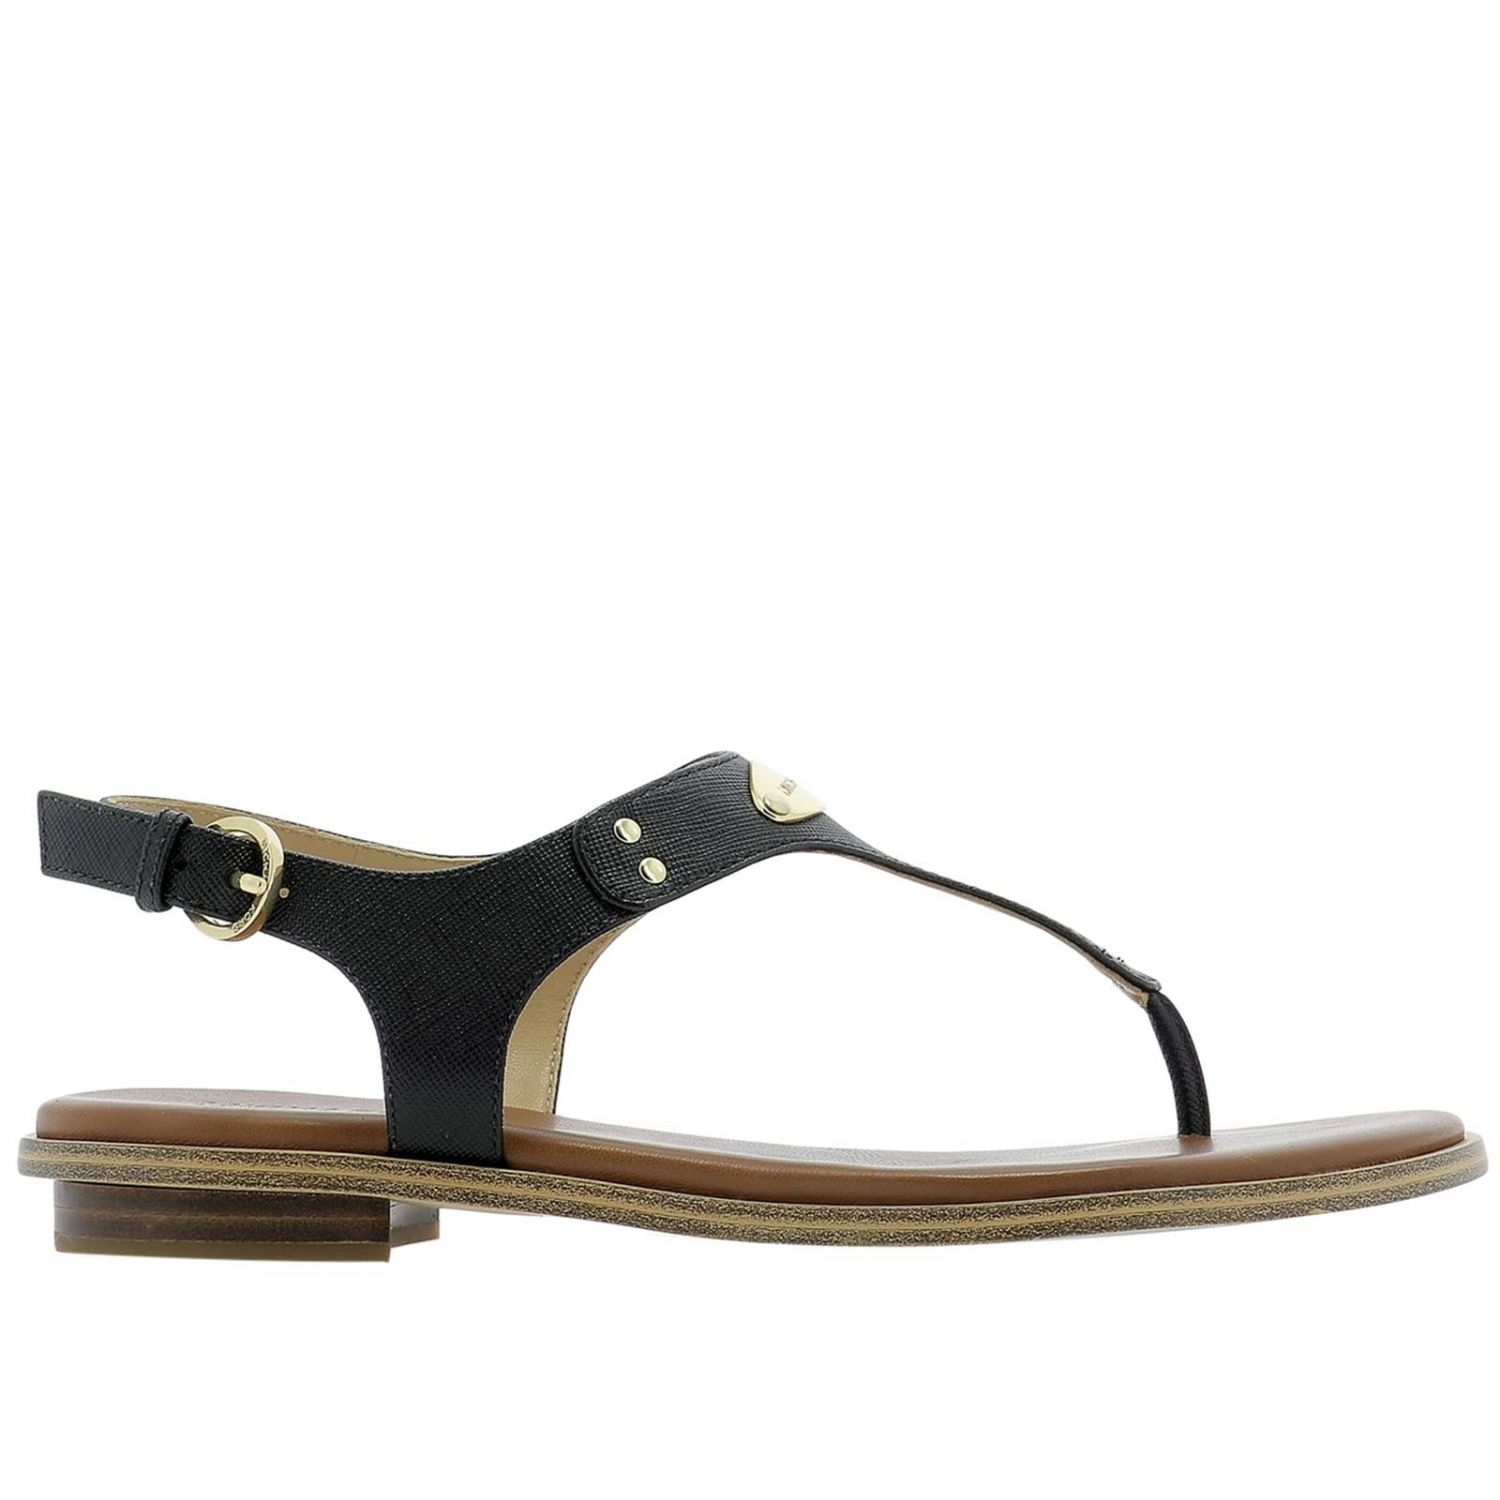 Michael Kors Outlet: flat sandals for woman - Black | Michael Kors flat ...